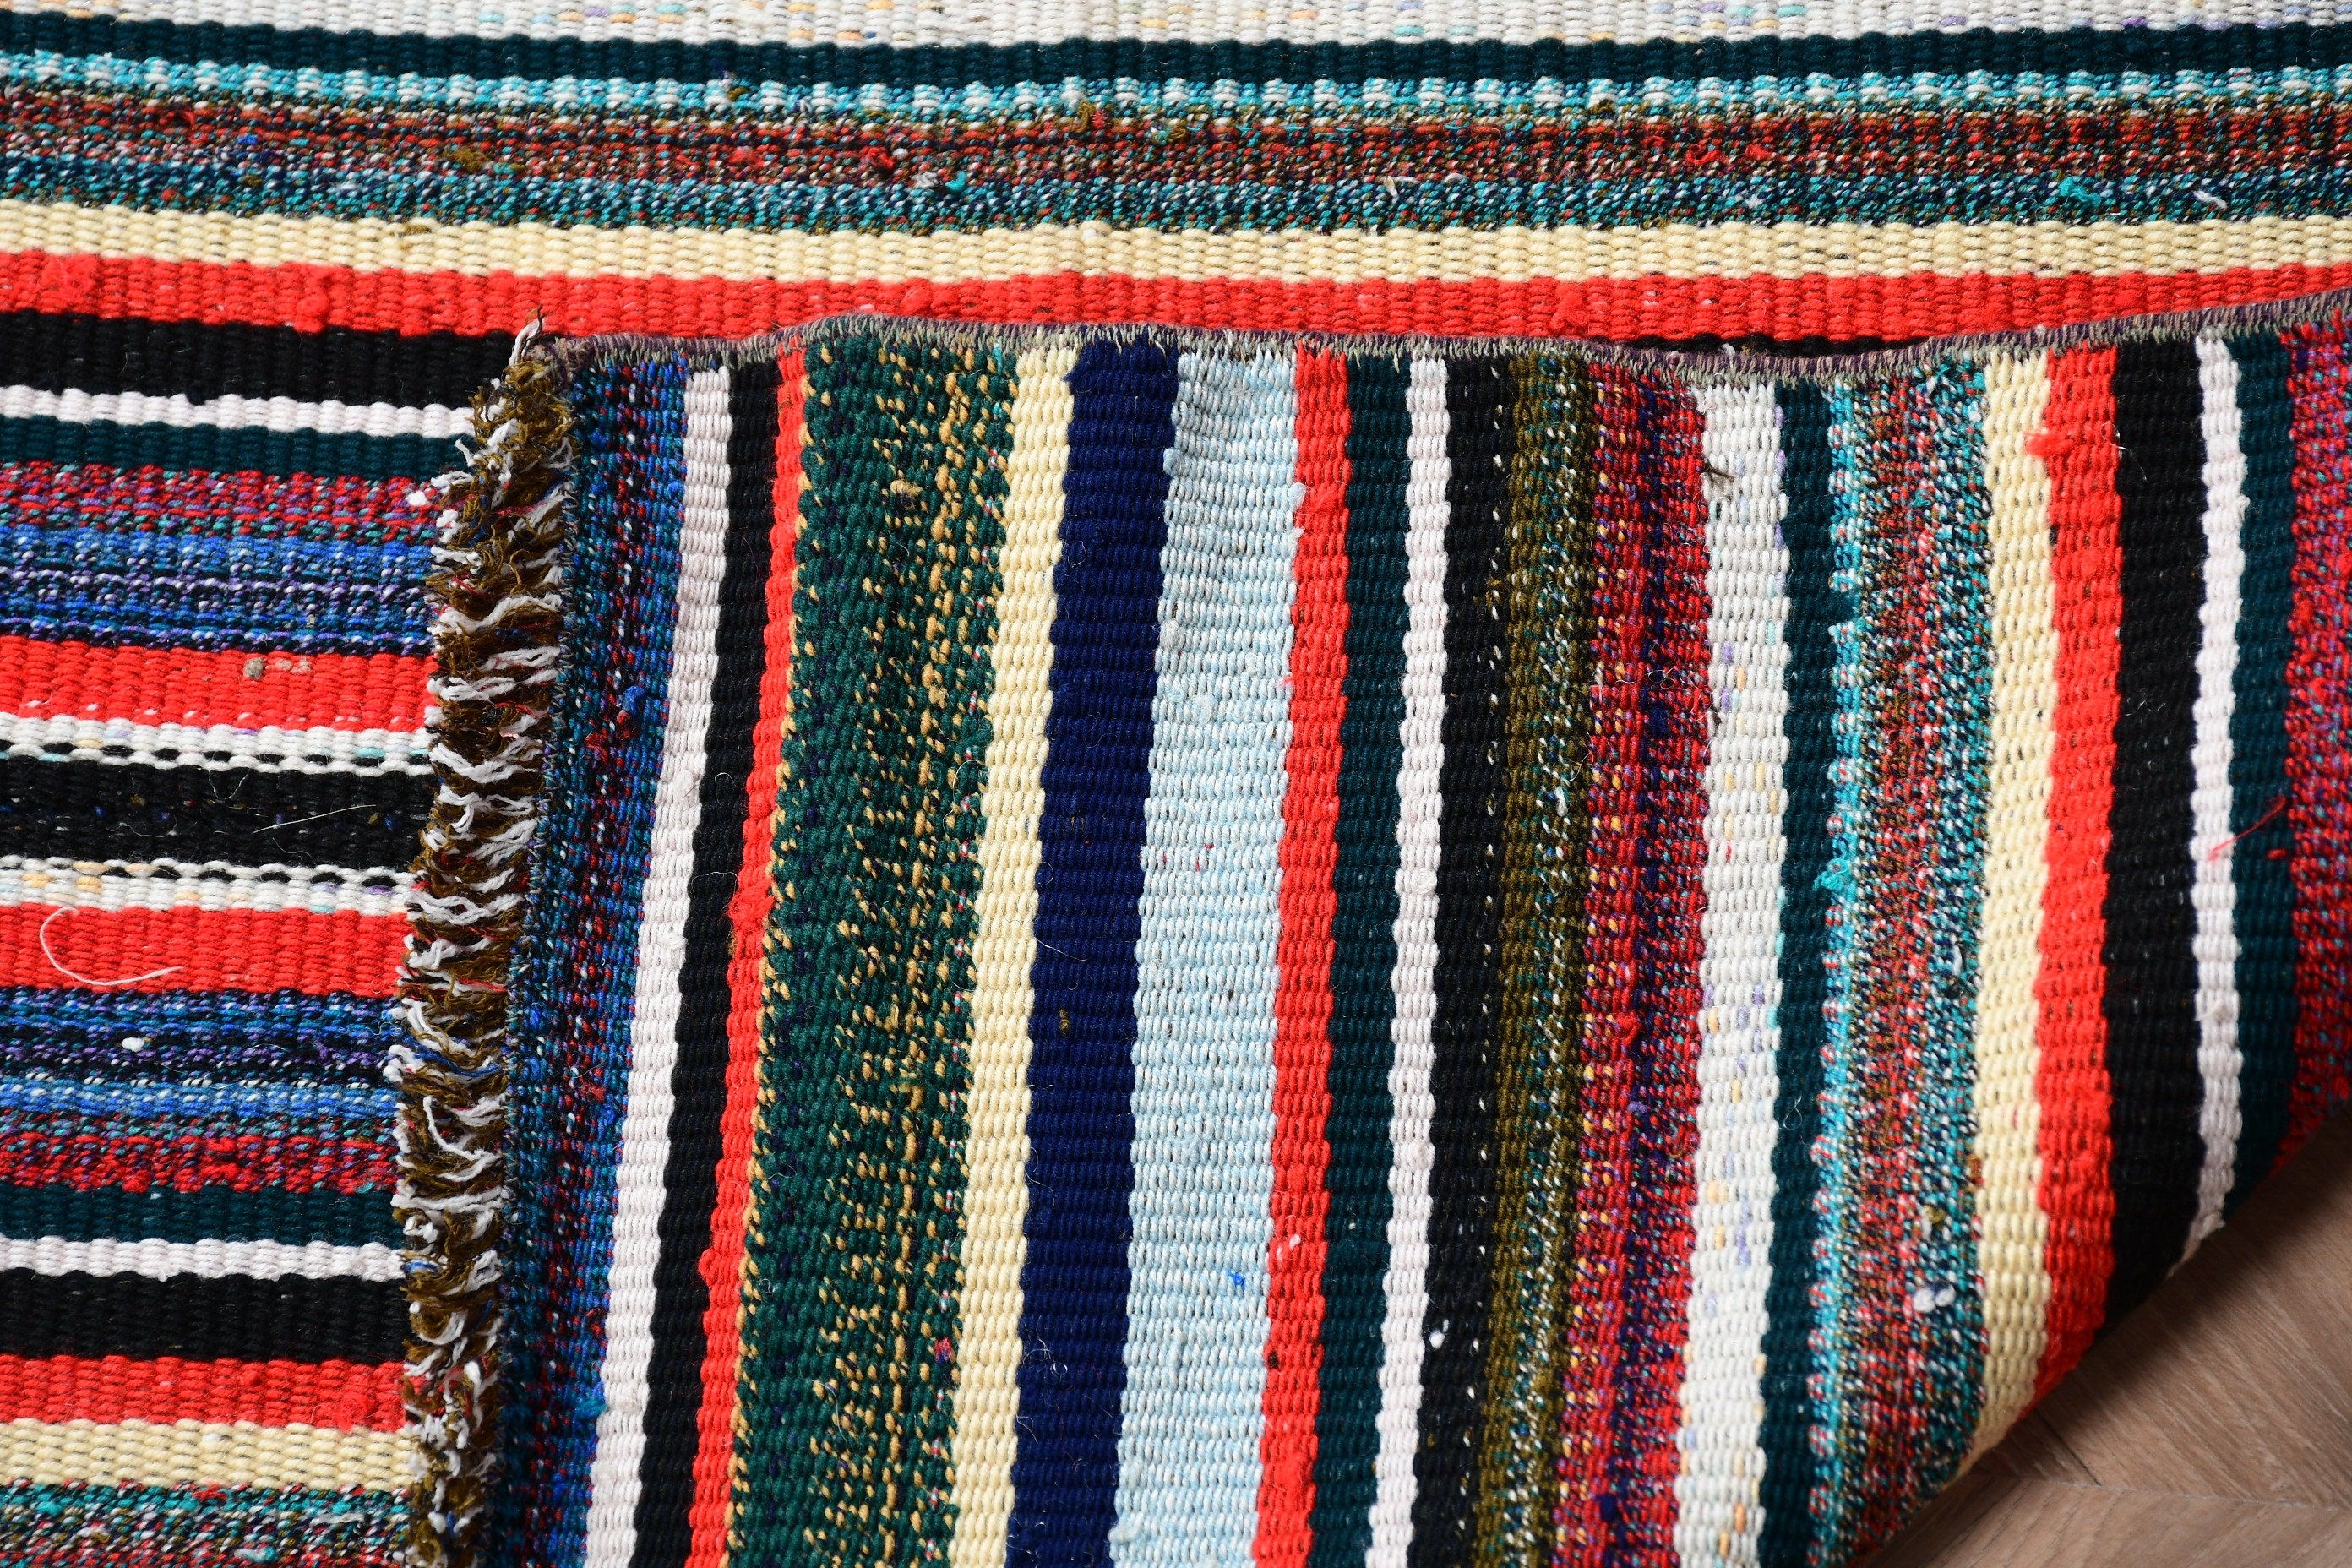 Blue Antique Rug, Rugs for Stair, Kitchen Rugs, Kilim, Oushak Rug, 2.6x7.1 ft Runner Rugs, Art Rug, Vintage Rug, Hallway Rugs, Turkish Rugs